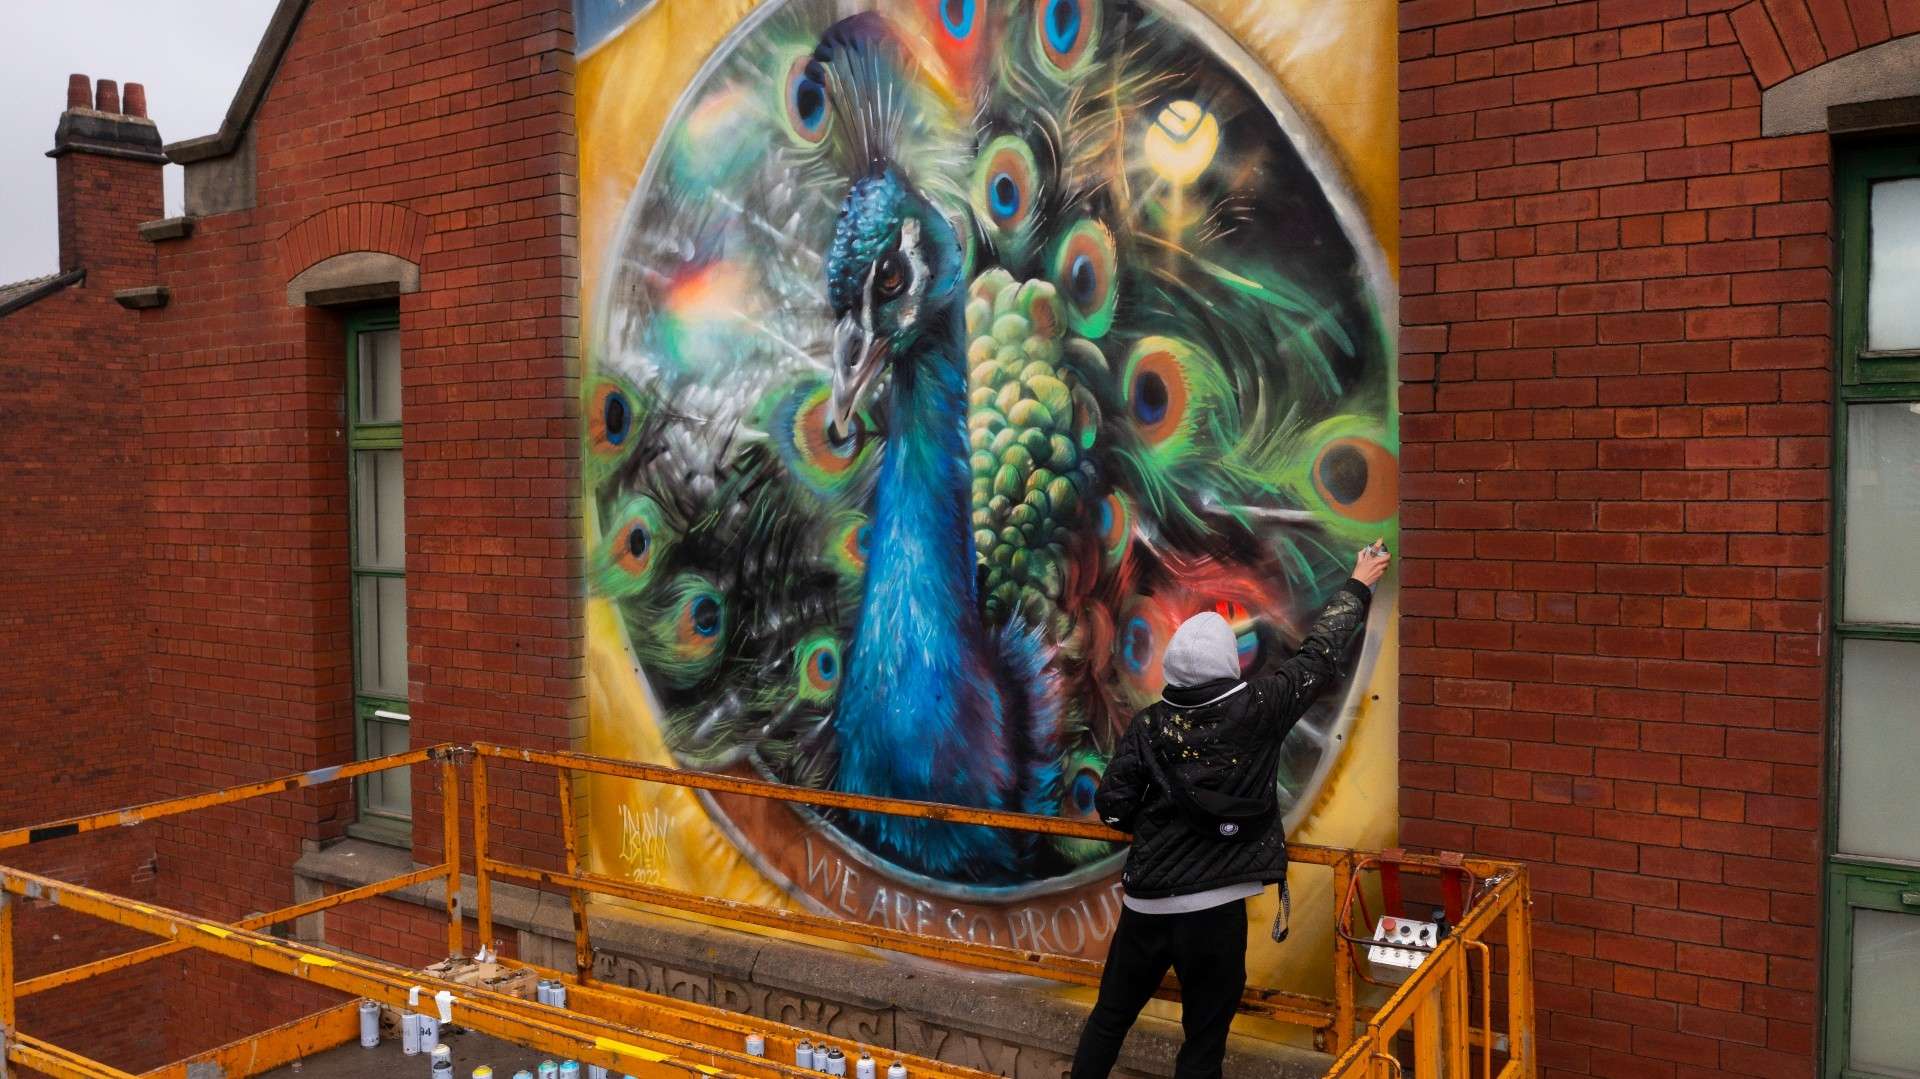 Leeds peacock mural 2